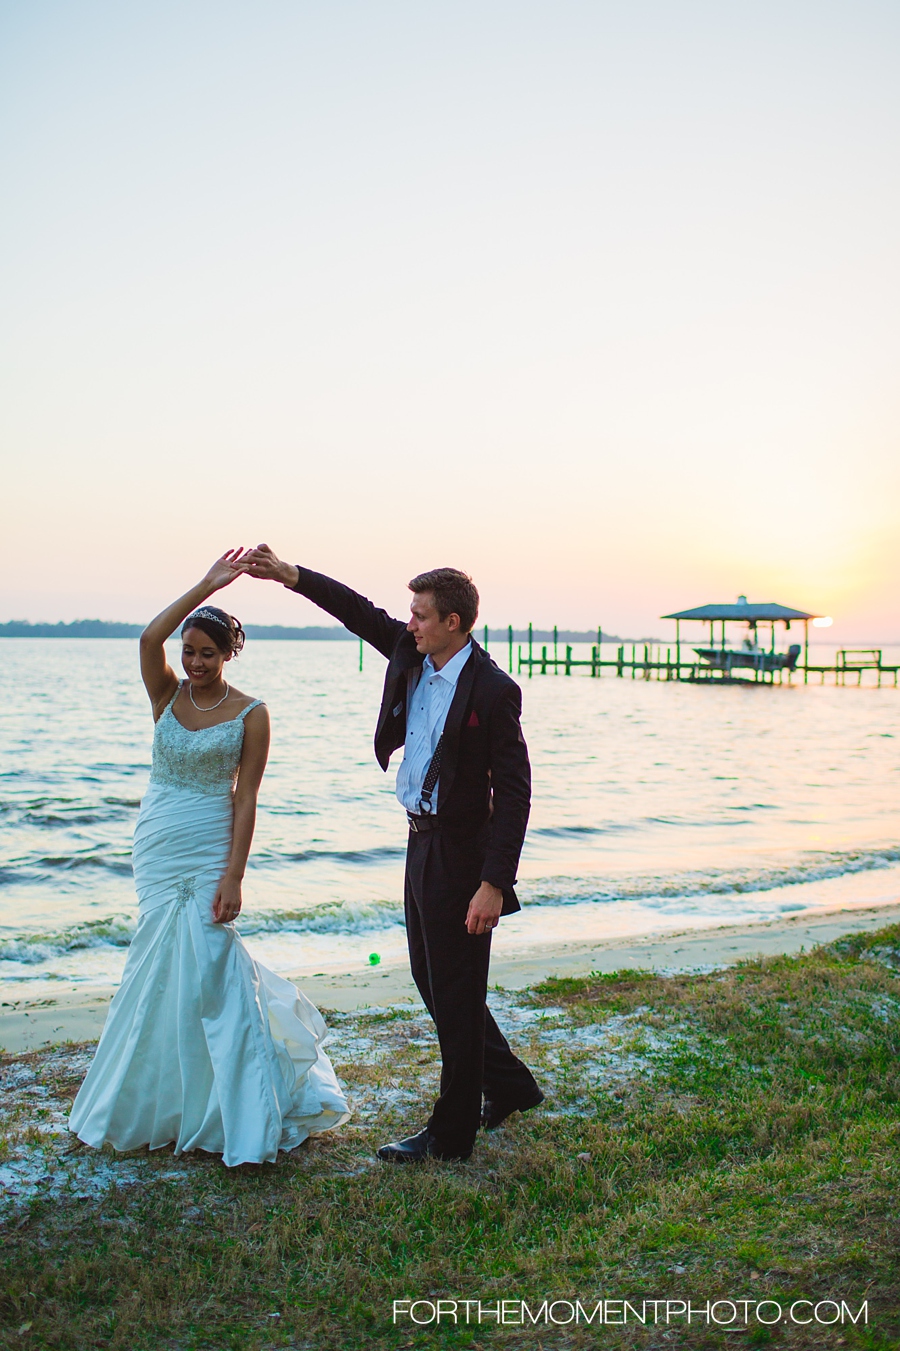 St Andrews Bay Yacht Club Panama City FL Wedding Venue